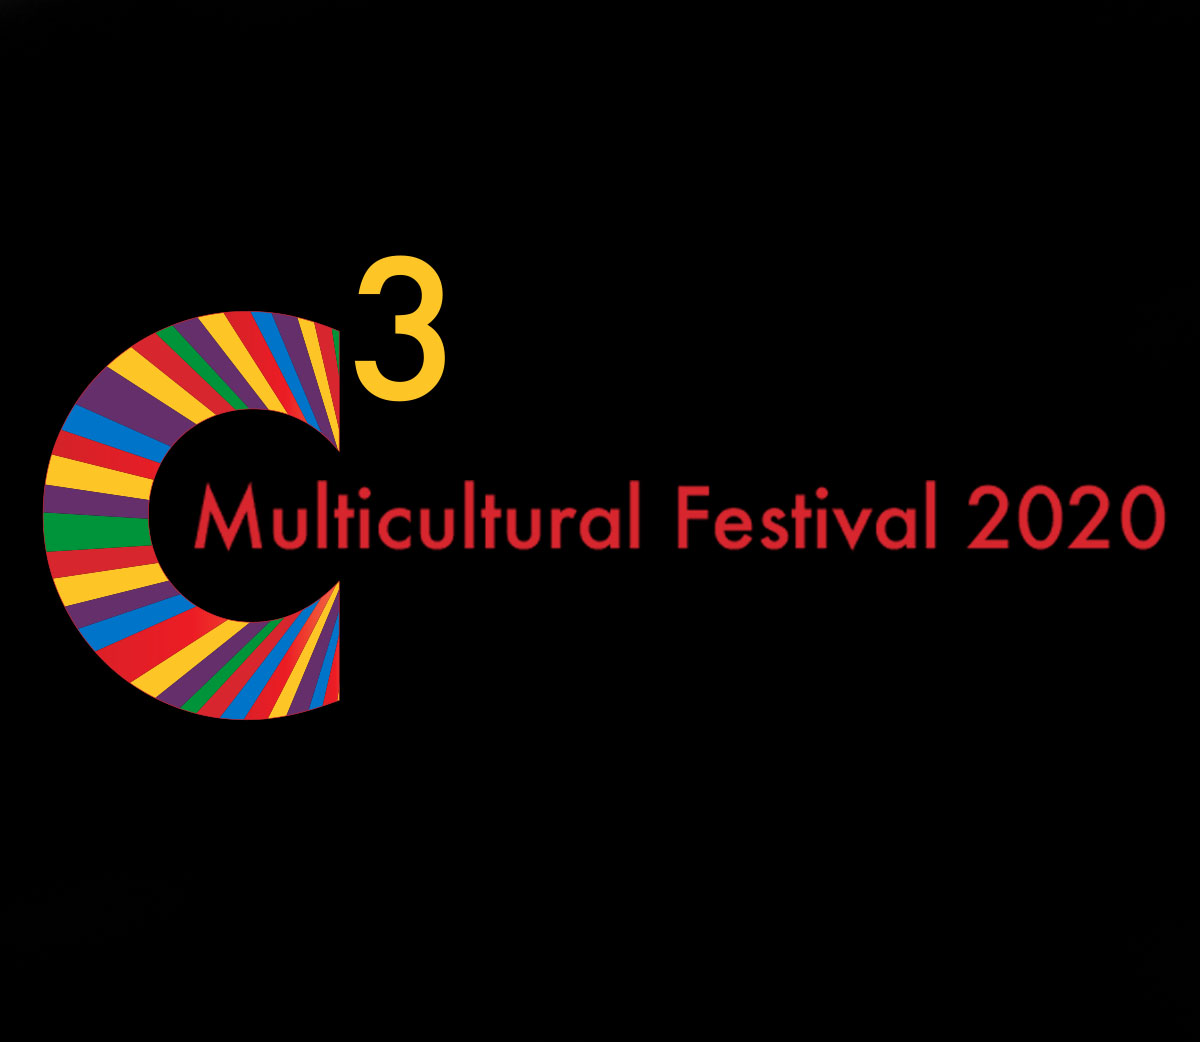 Multicultural Festival logo